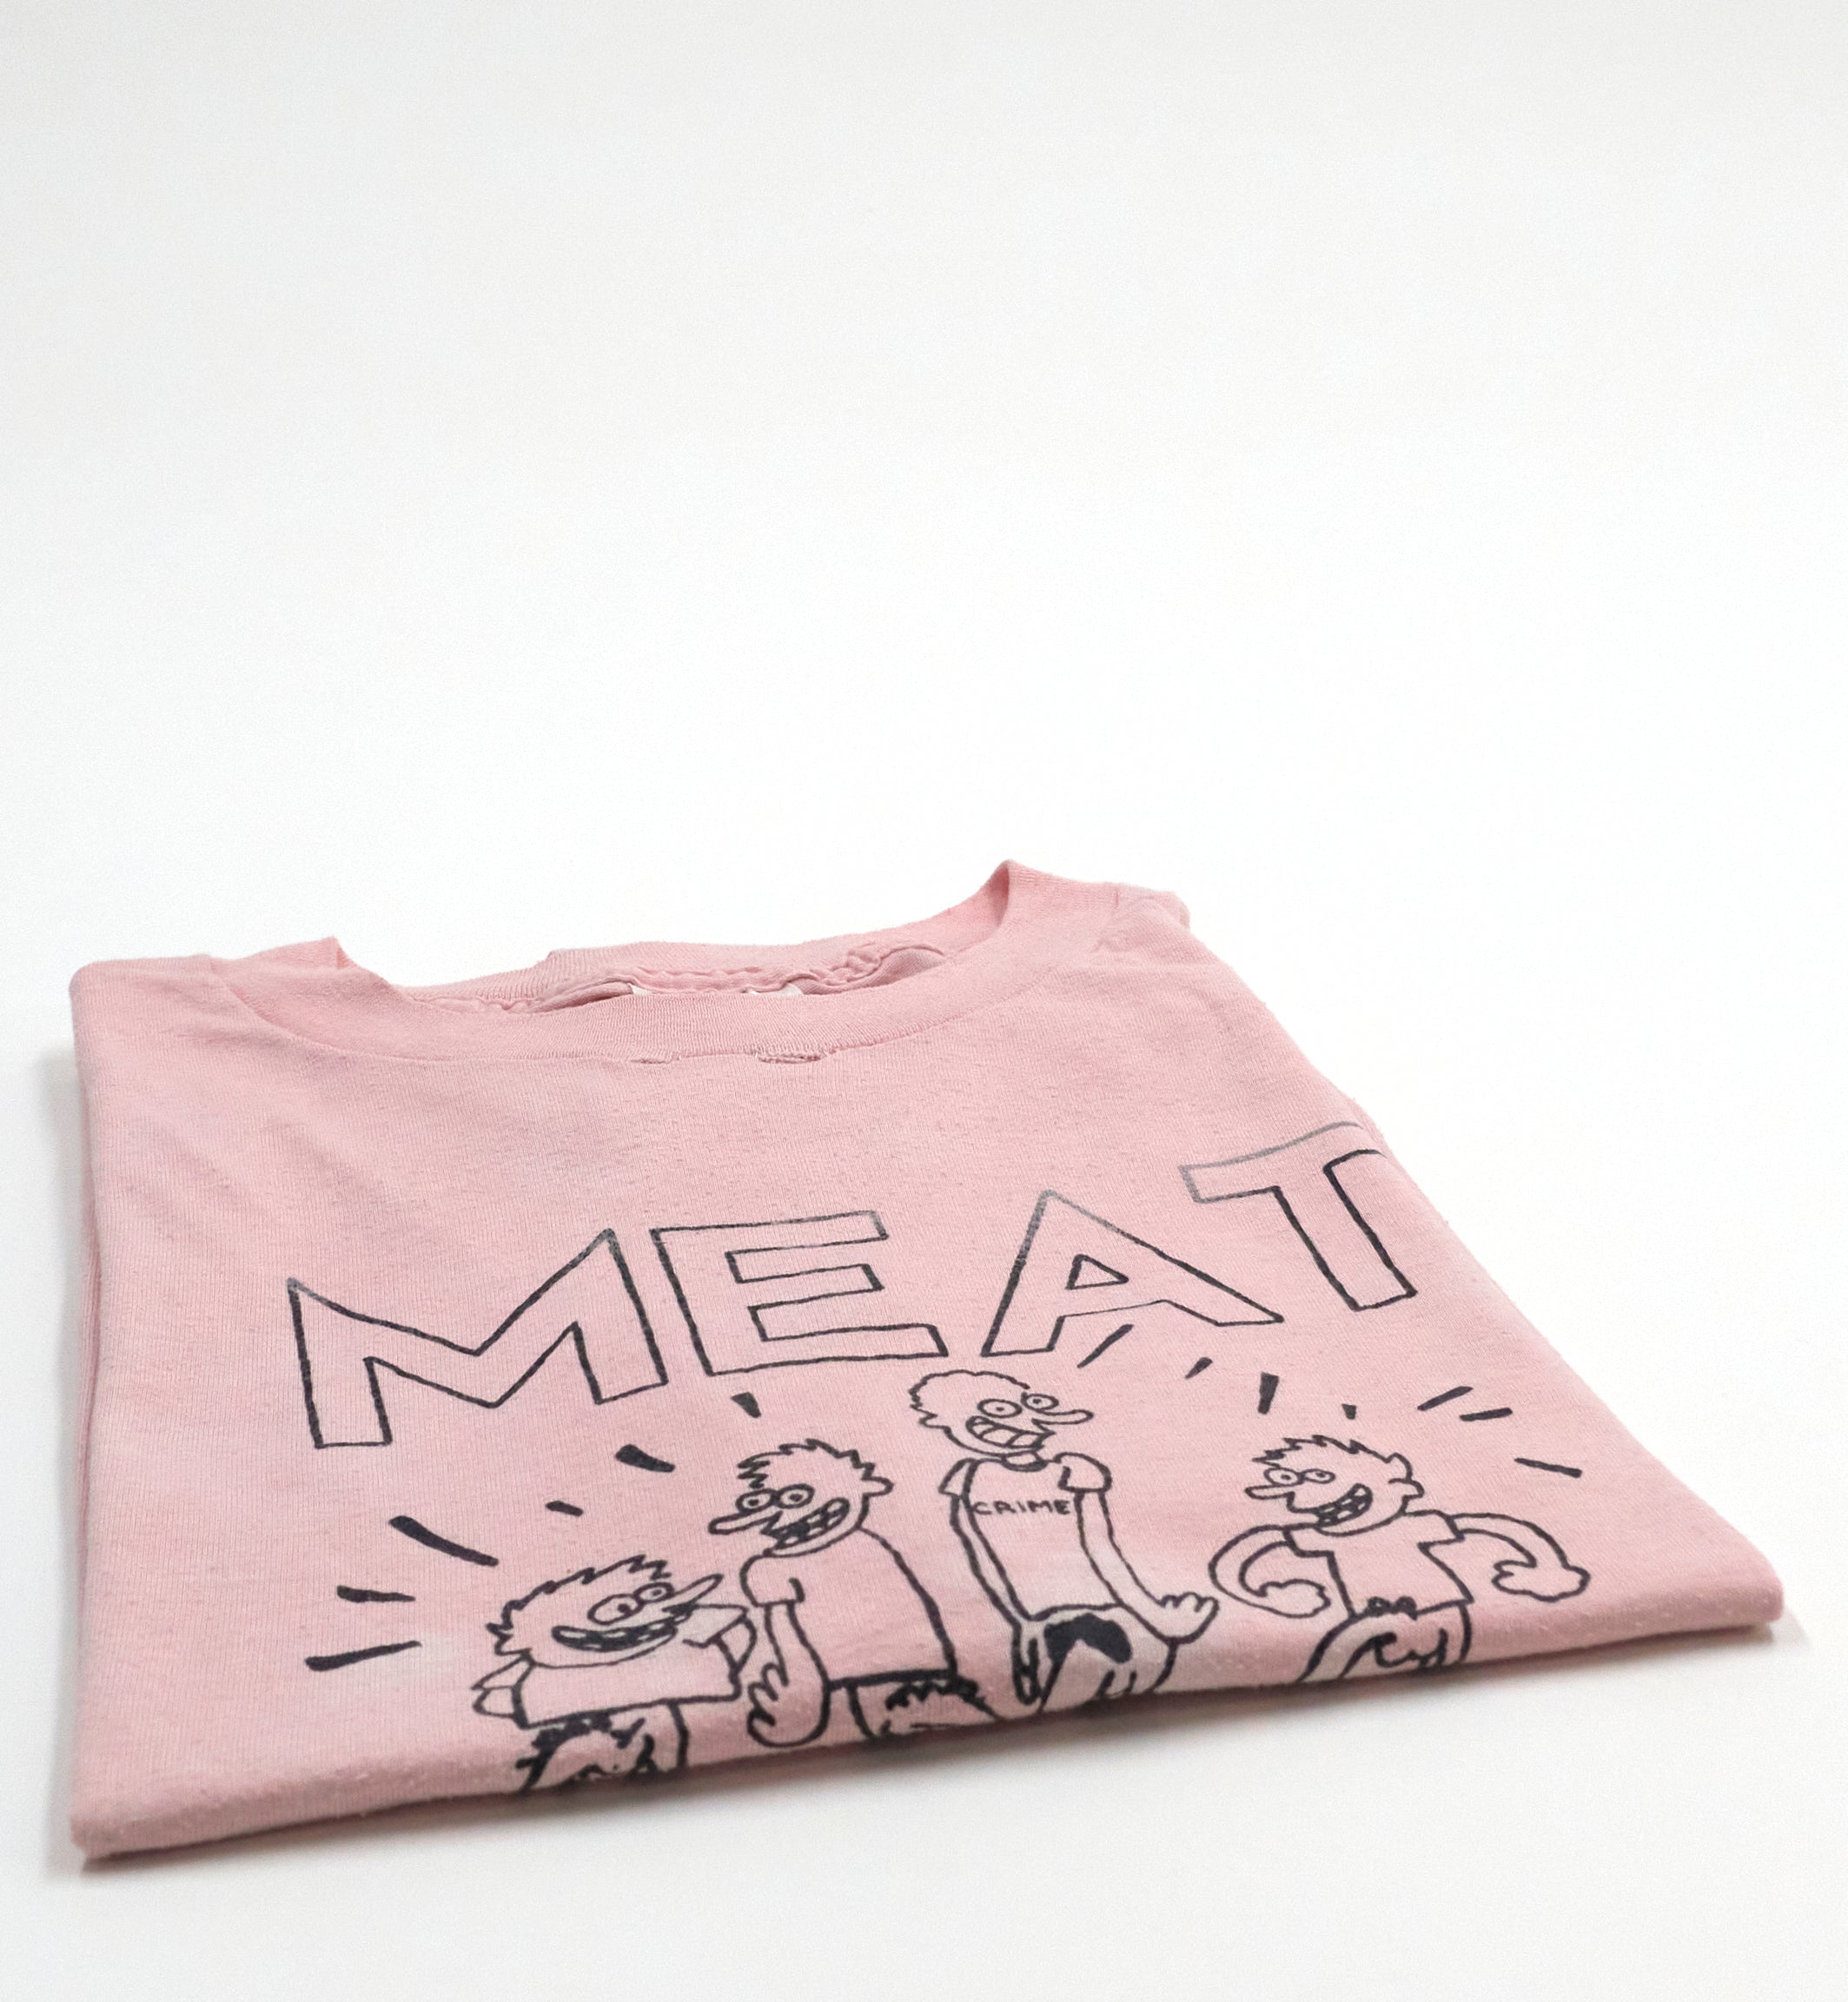 Meatmen - Stud Powercock 1/C Tour Shirt Size XL